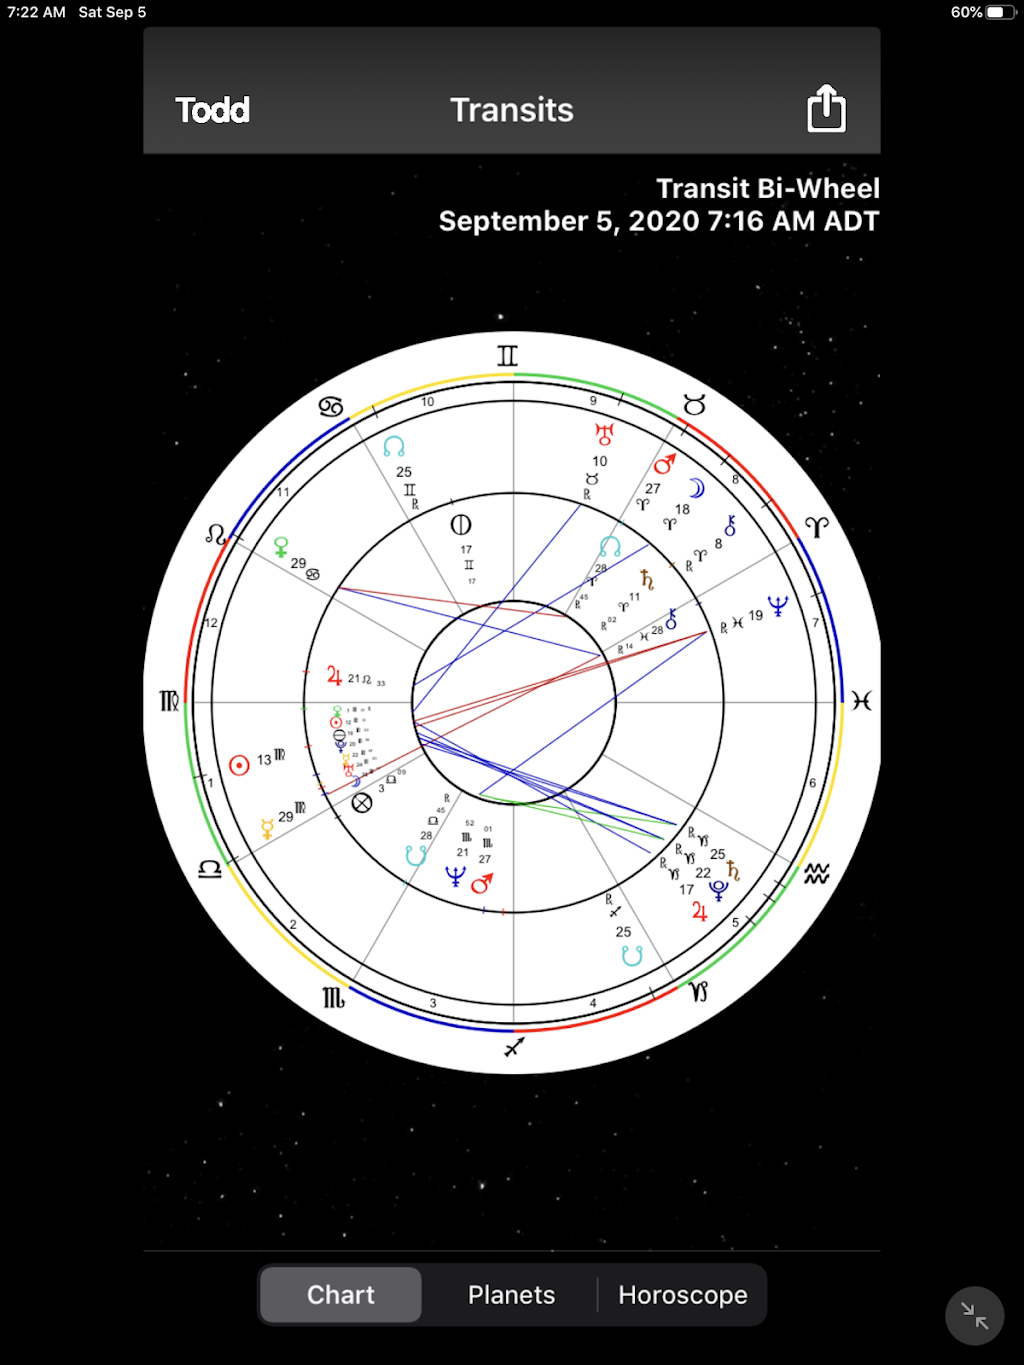 Lizanne Hanks Astrology | 9972 Nova Scotia Trunk 1, Wolfville, NS B4P 2R2, Canada | Phone: (902) 309-0200